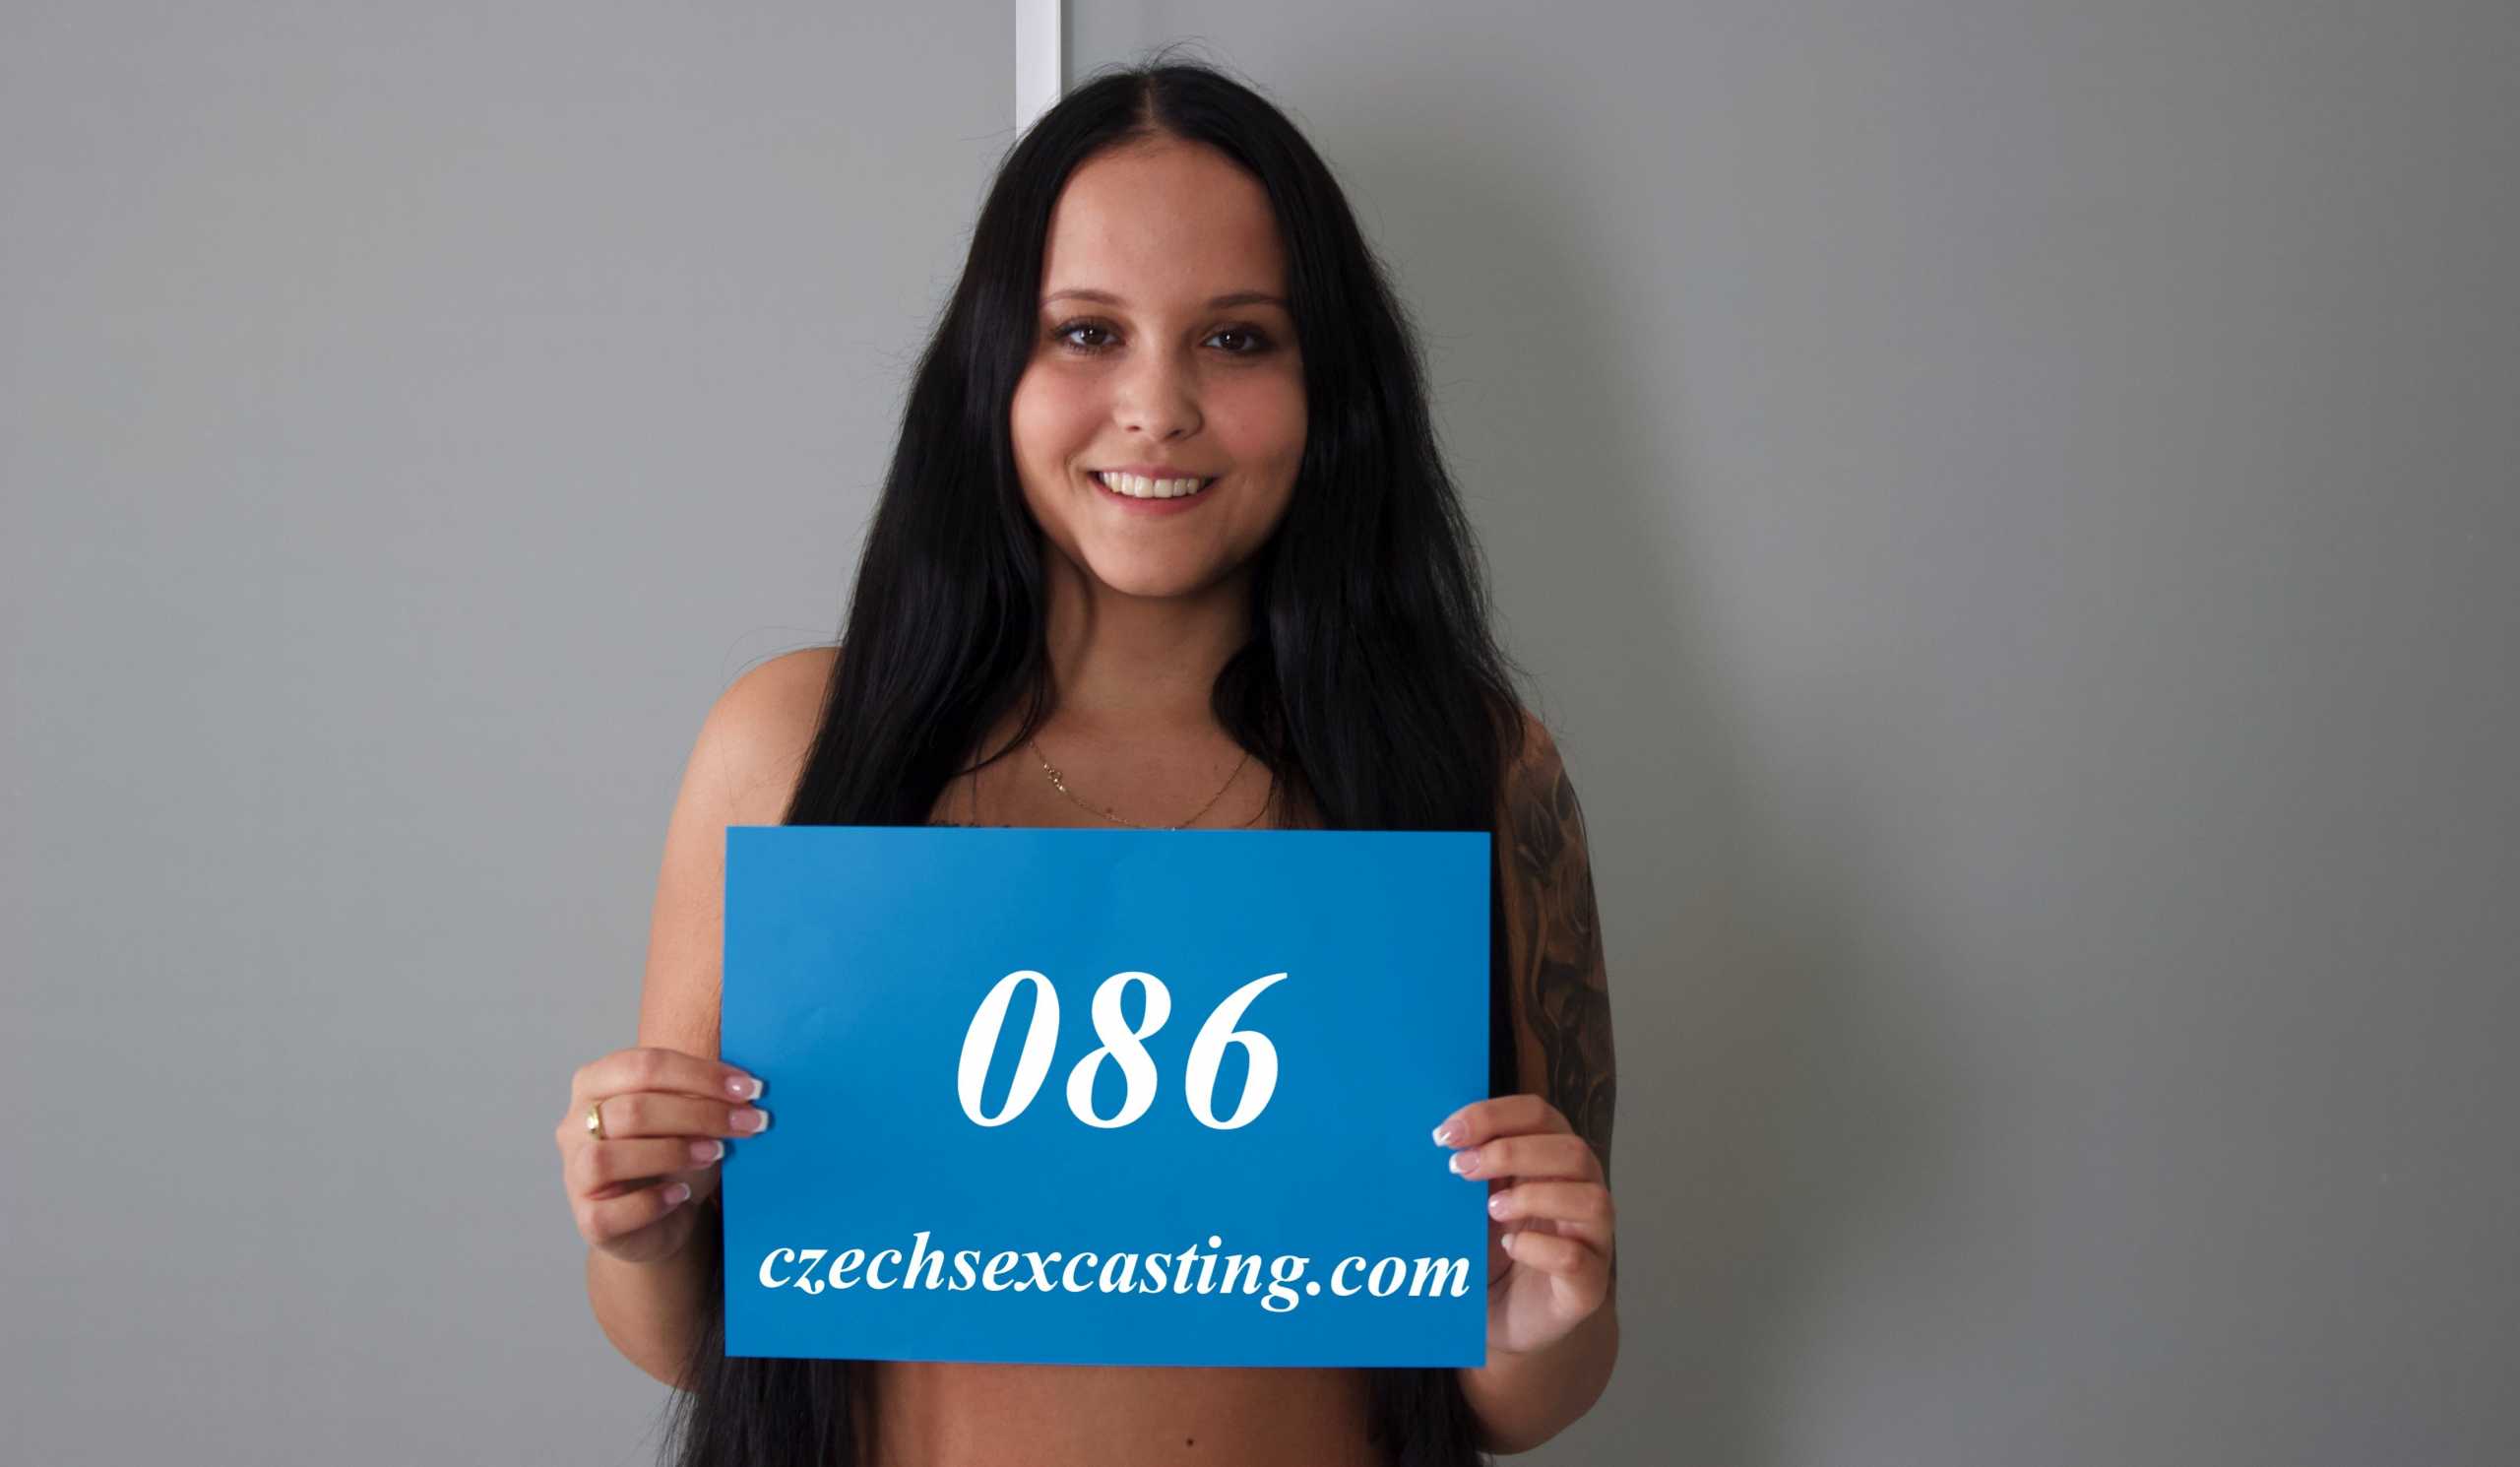 Jennifer Mendez Czech Sex Casting 86 Free Casting Video